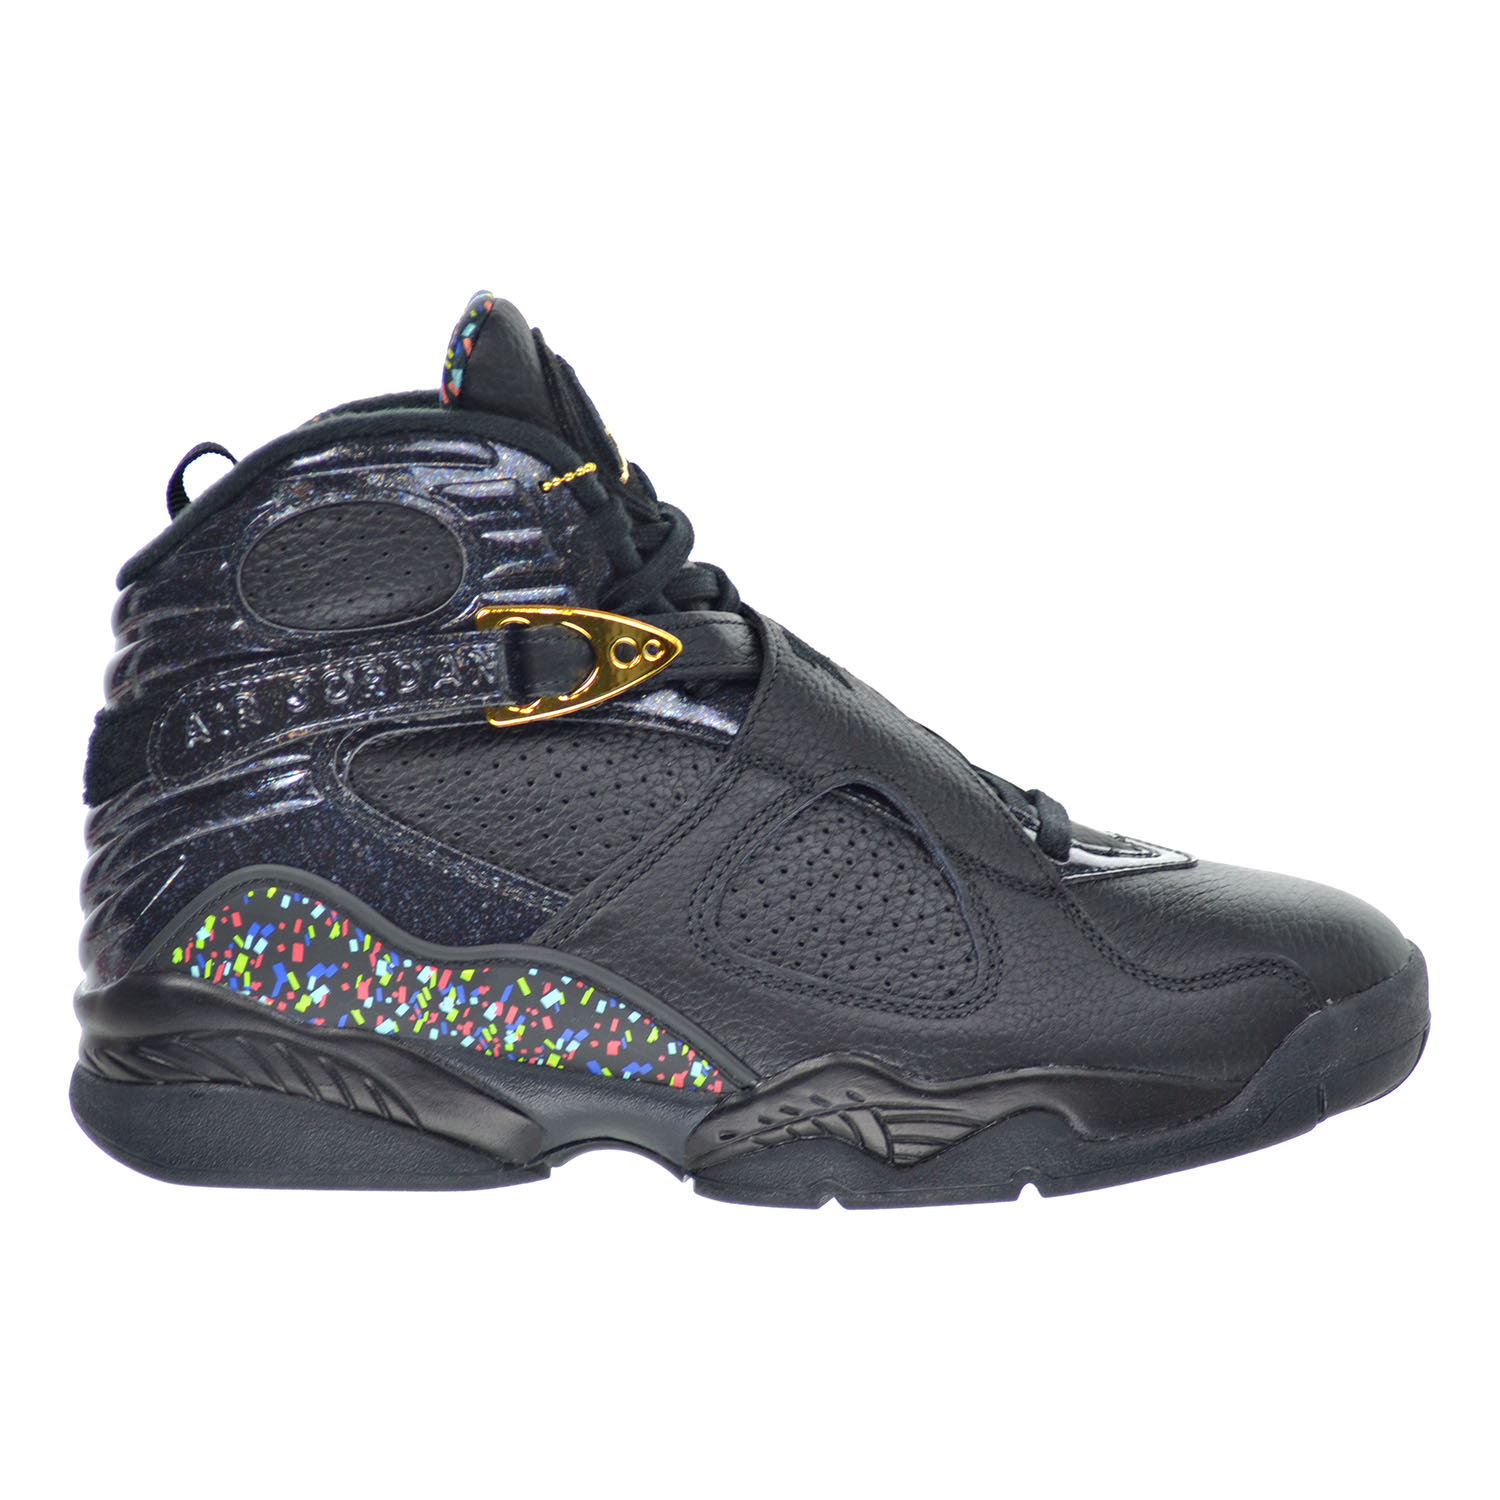 Michael Jordan Air Jordan 8 Retro Cigar & Champagne Men's Shoes Black/Gold/Anthracite 832821-004